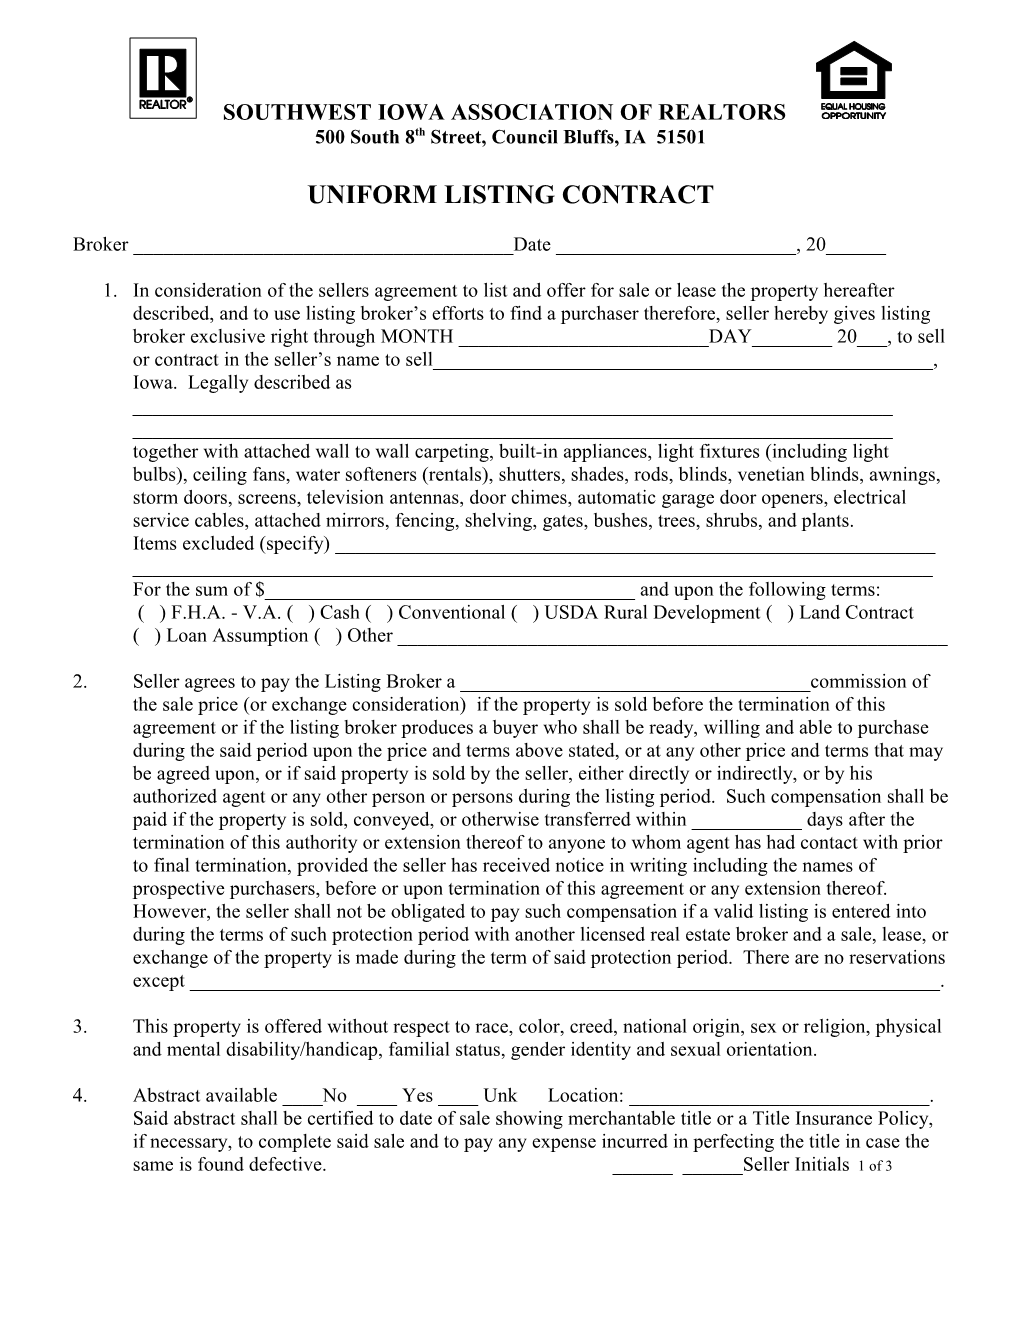 Uniform Listing Contract